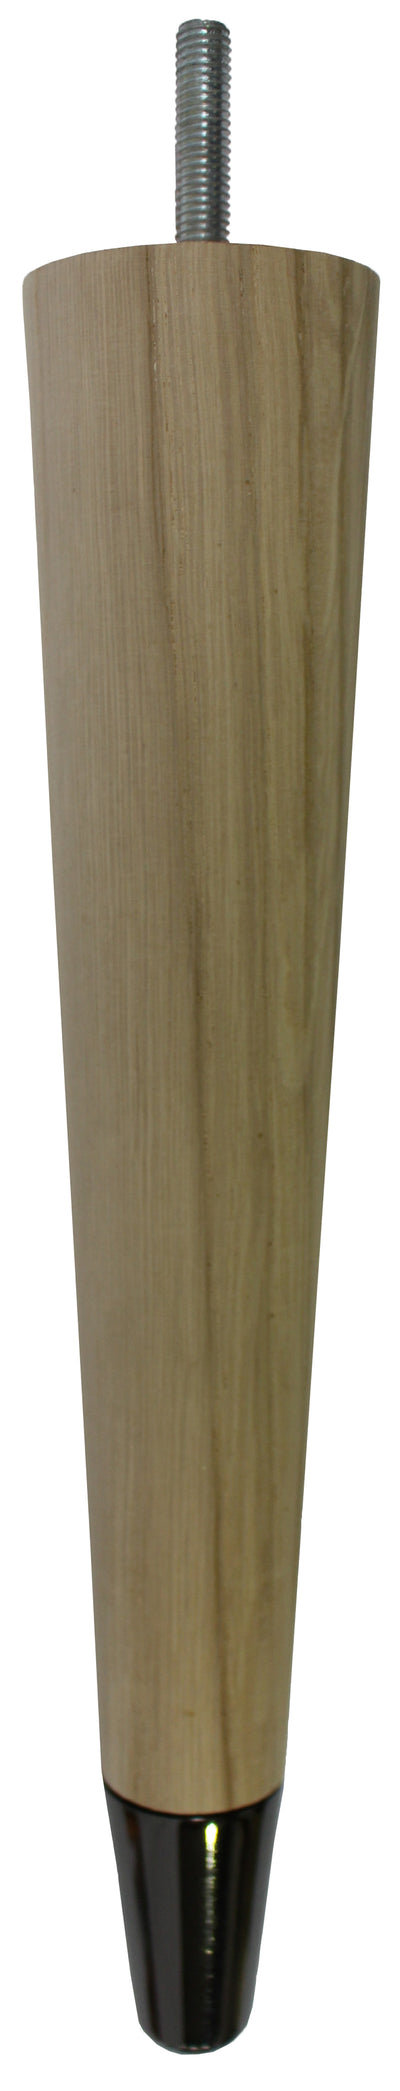 Liva Solid Oak Tapered Furniture Legs - Raw Finish - Black Chrome Slipper Cups - Set of 4